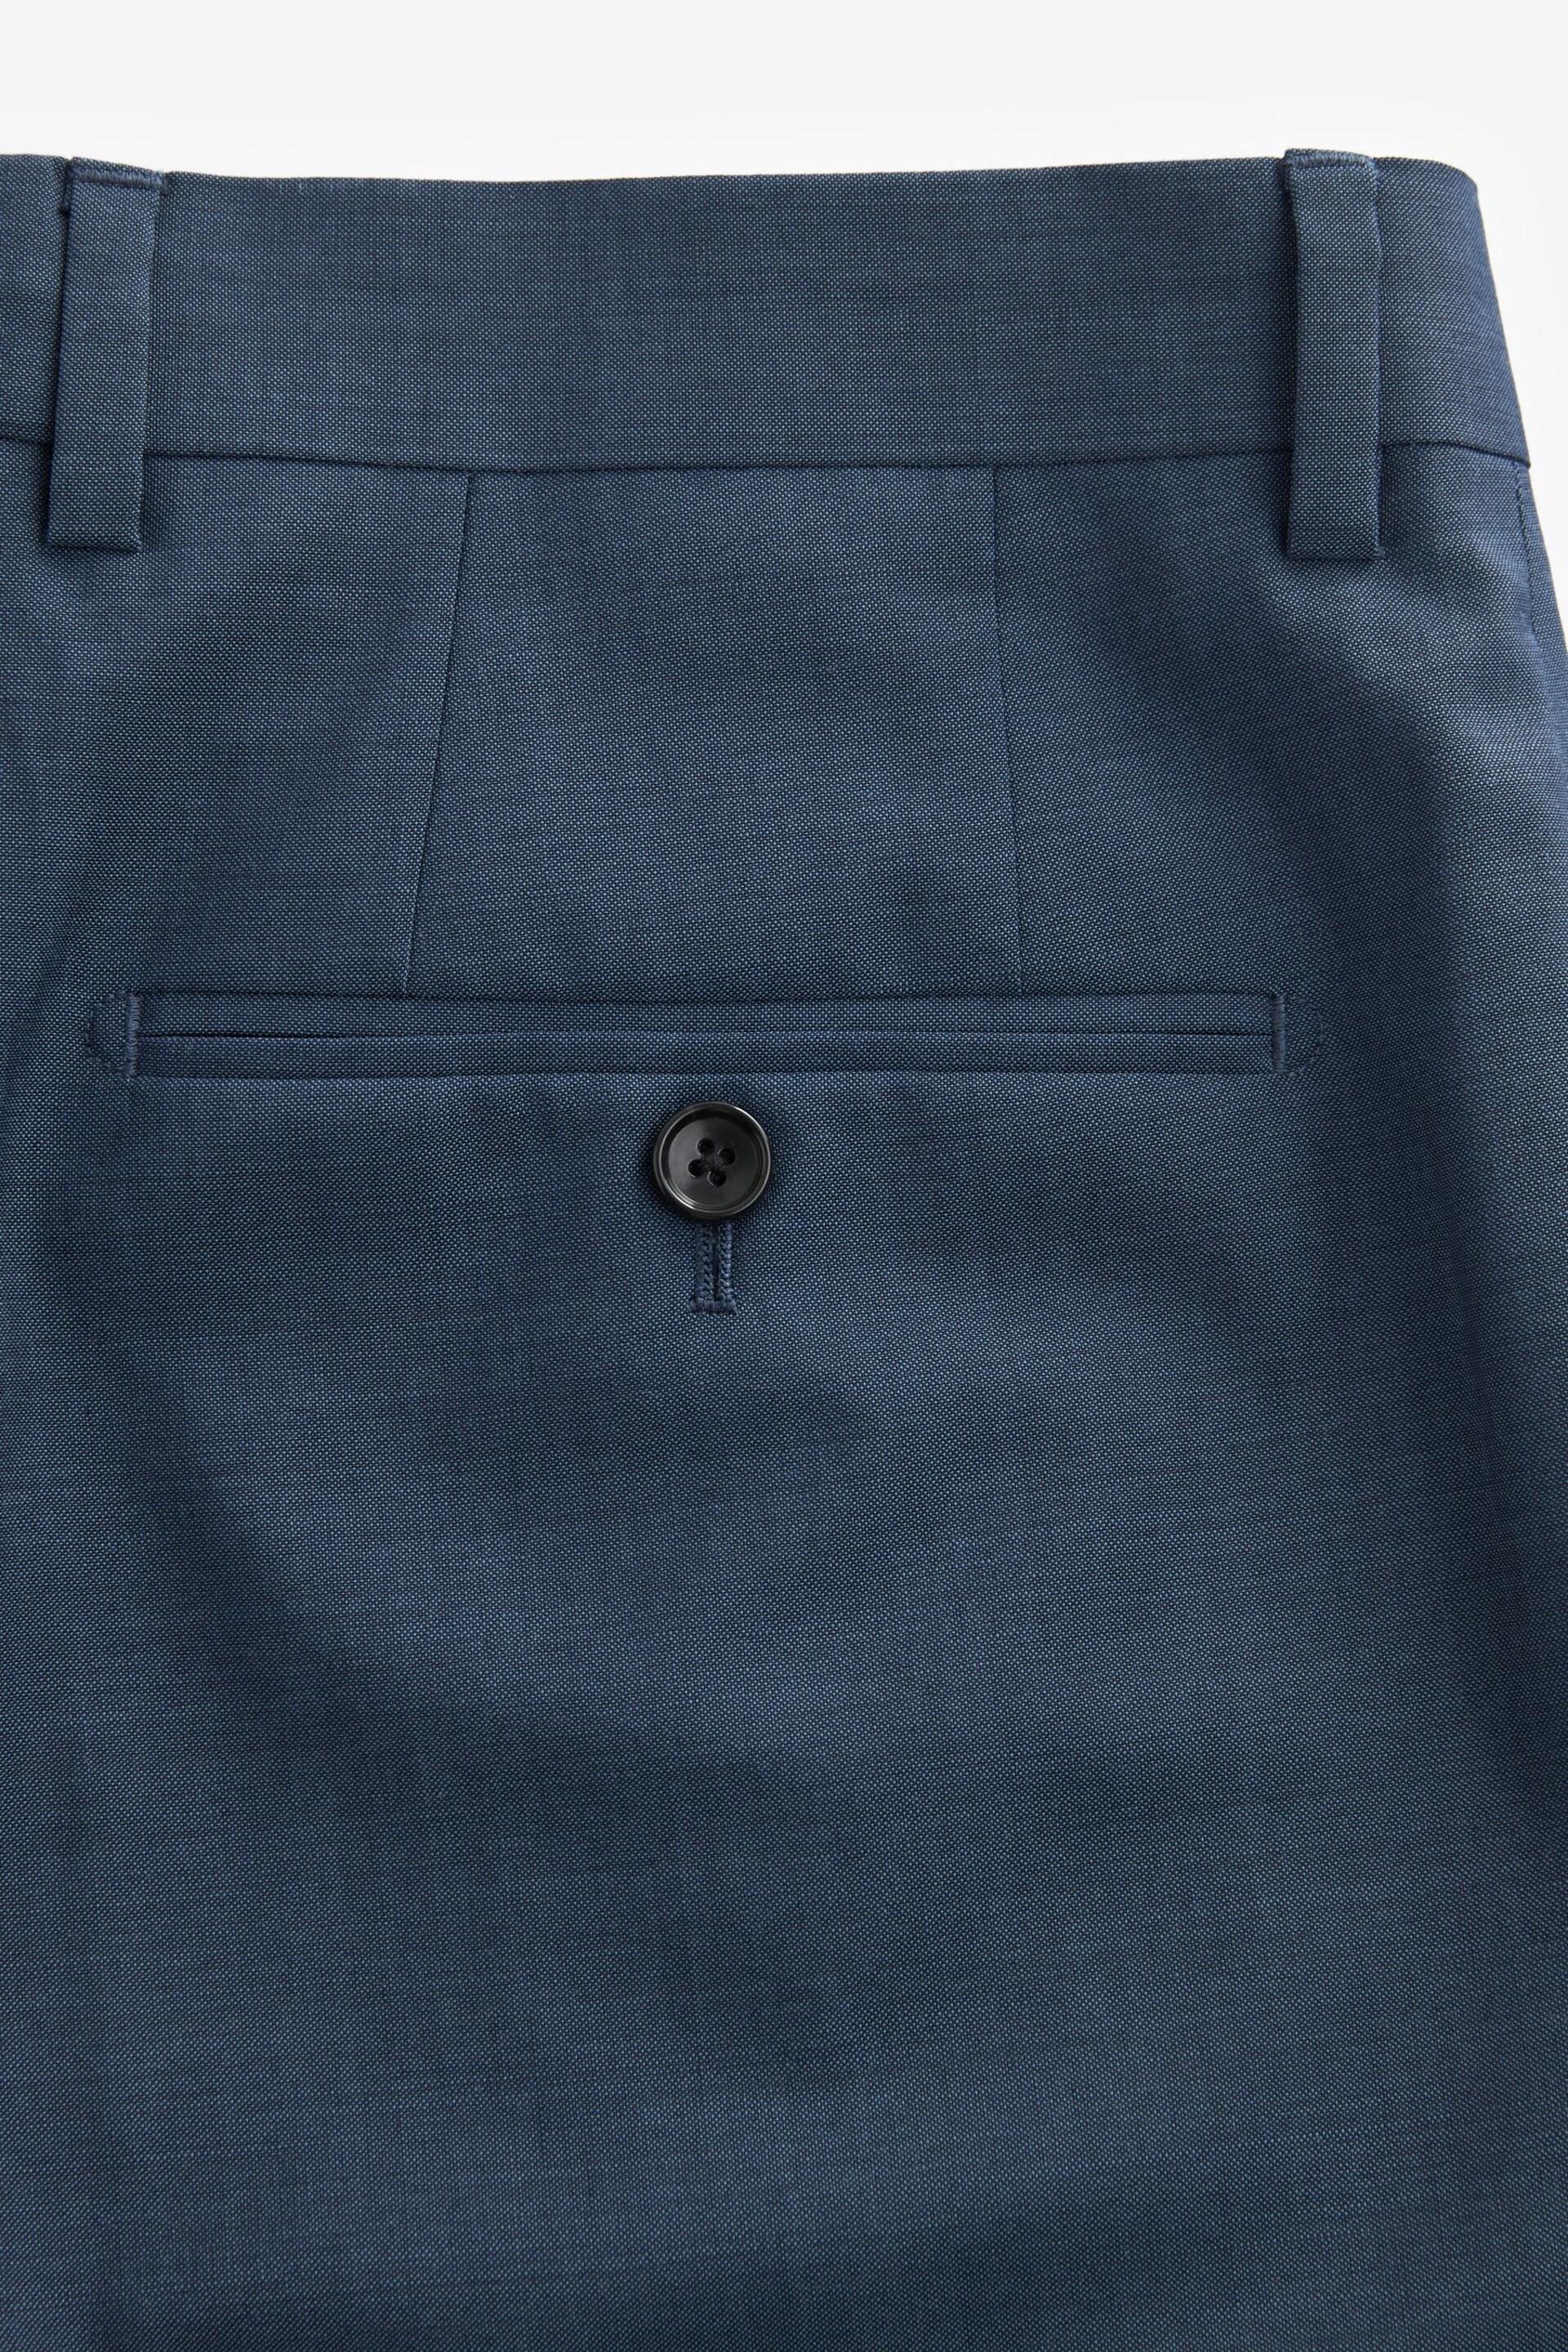 Light Blue Light Blue Slim Fit Signature Tollegno Wool Plain Suit Trousers - Image 4 of 5